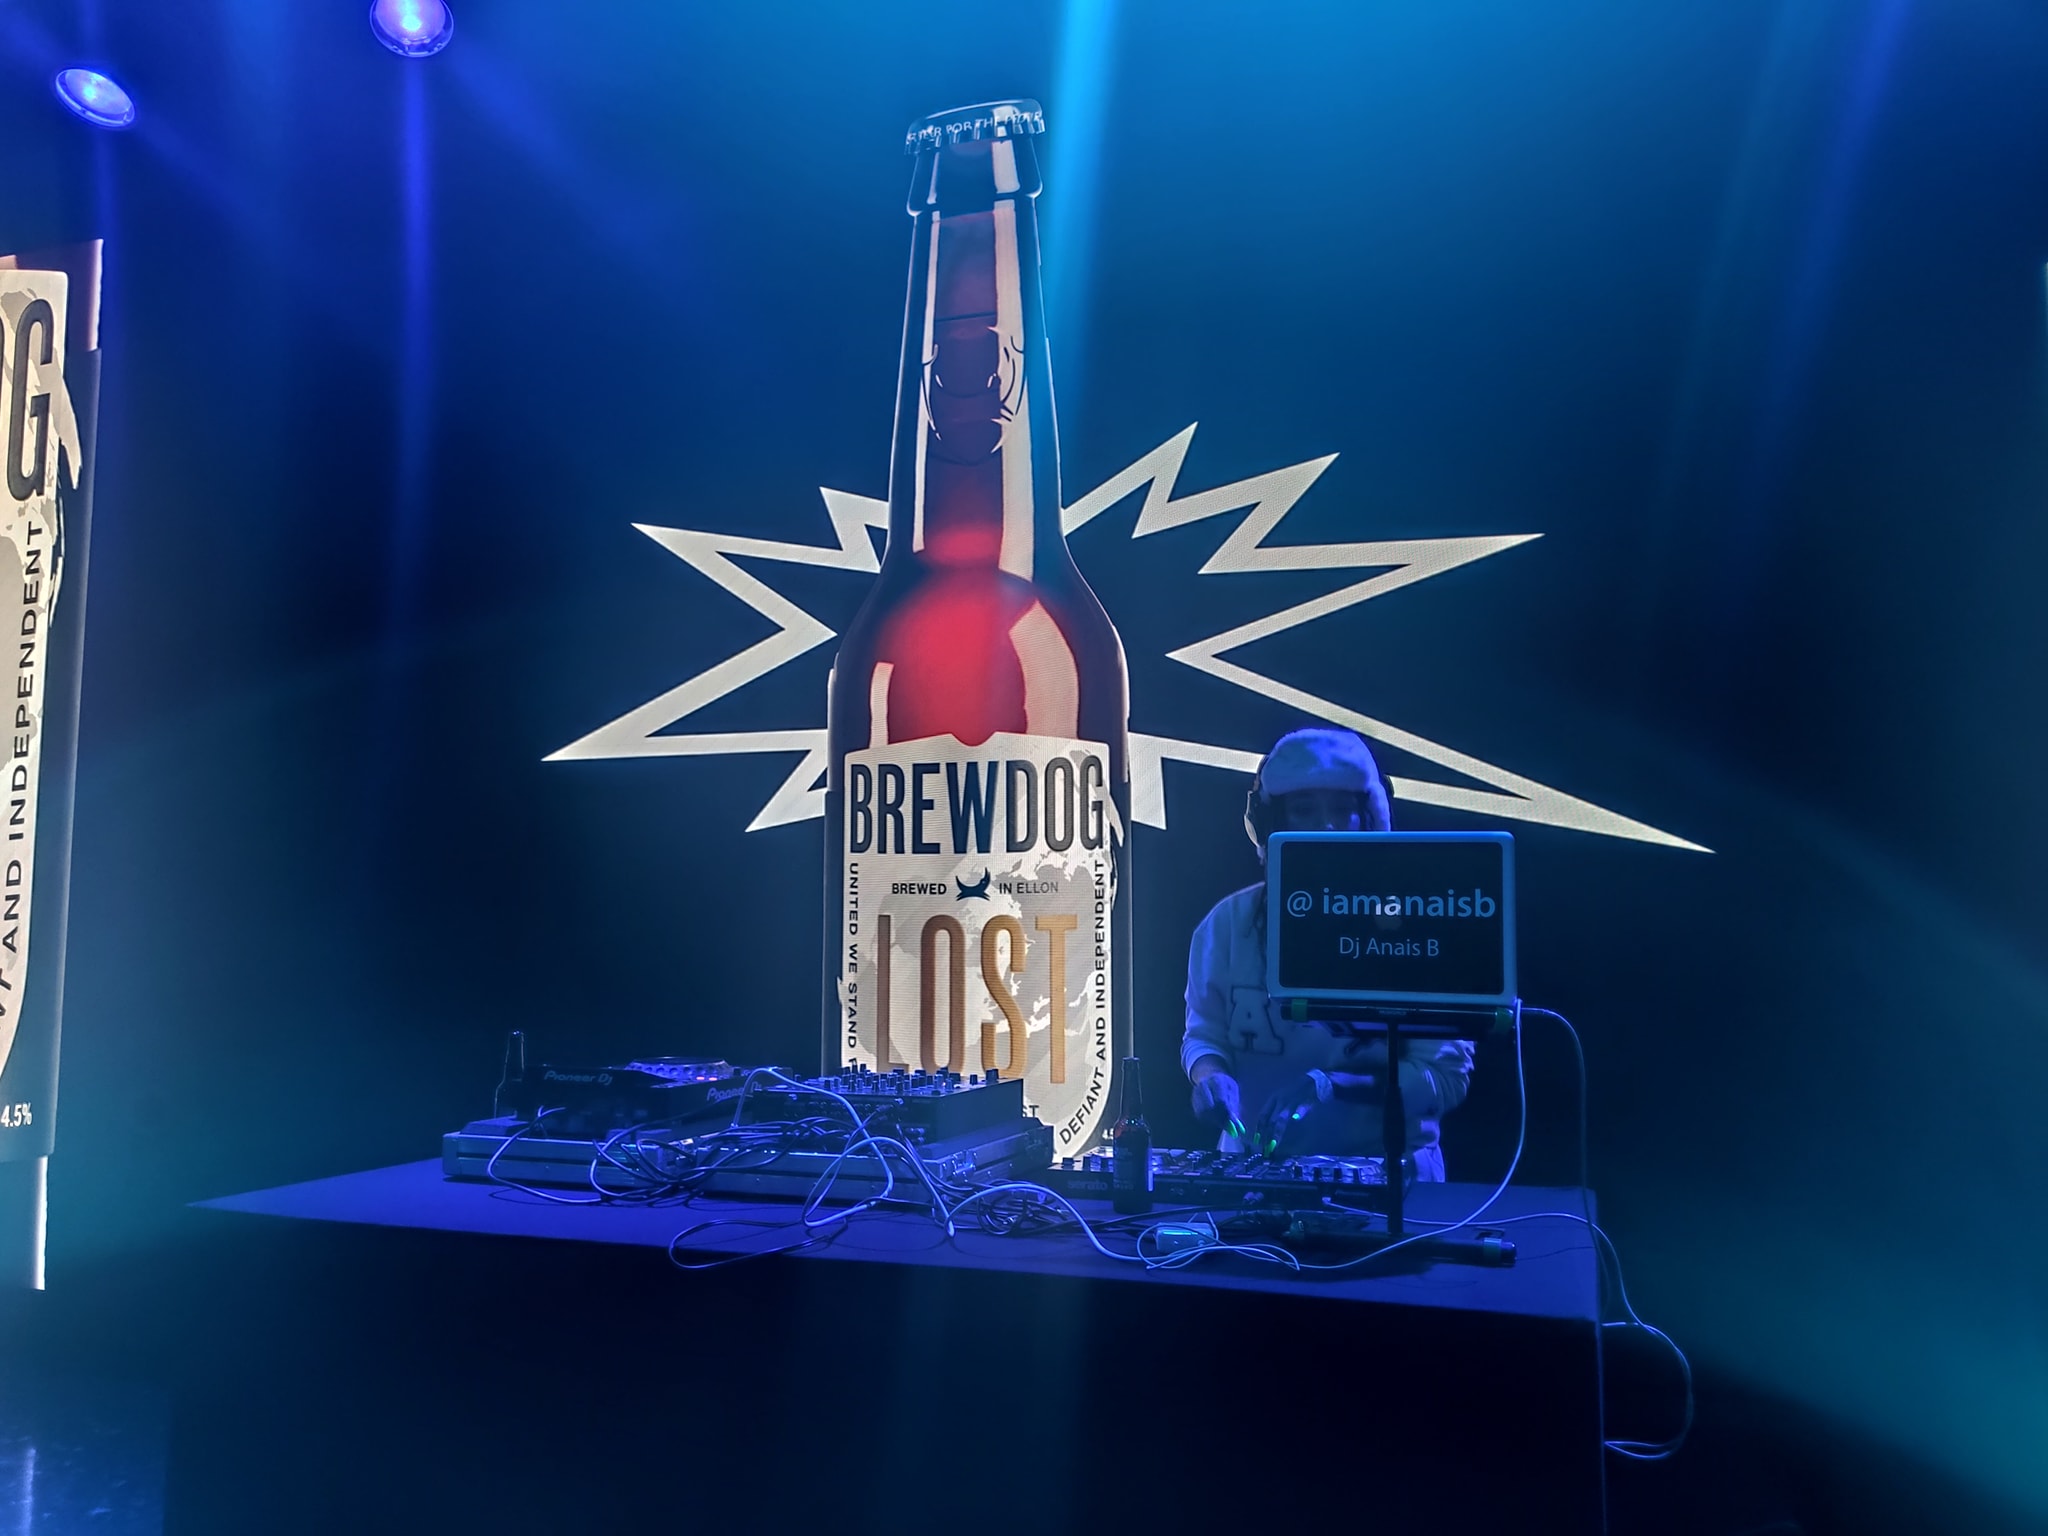 Bière BrewDog Lost en DJ Set